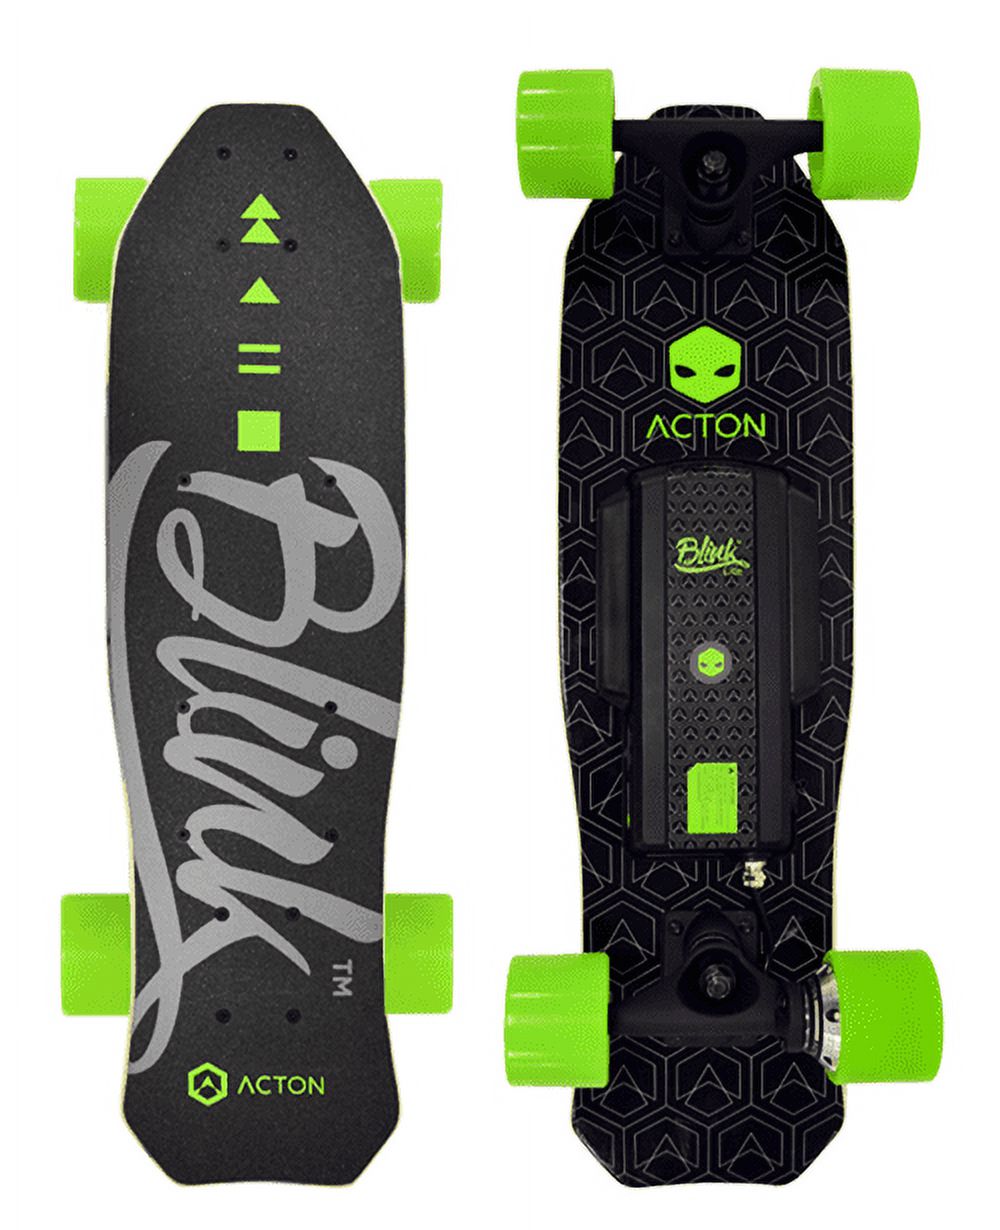 ACTON Blink Lite Electric Skateboard - image 1 of 9